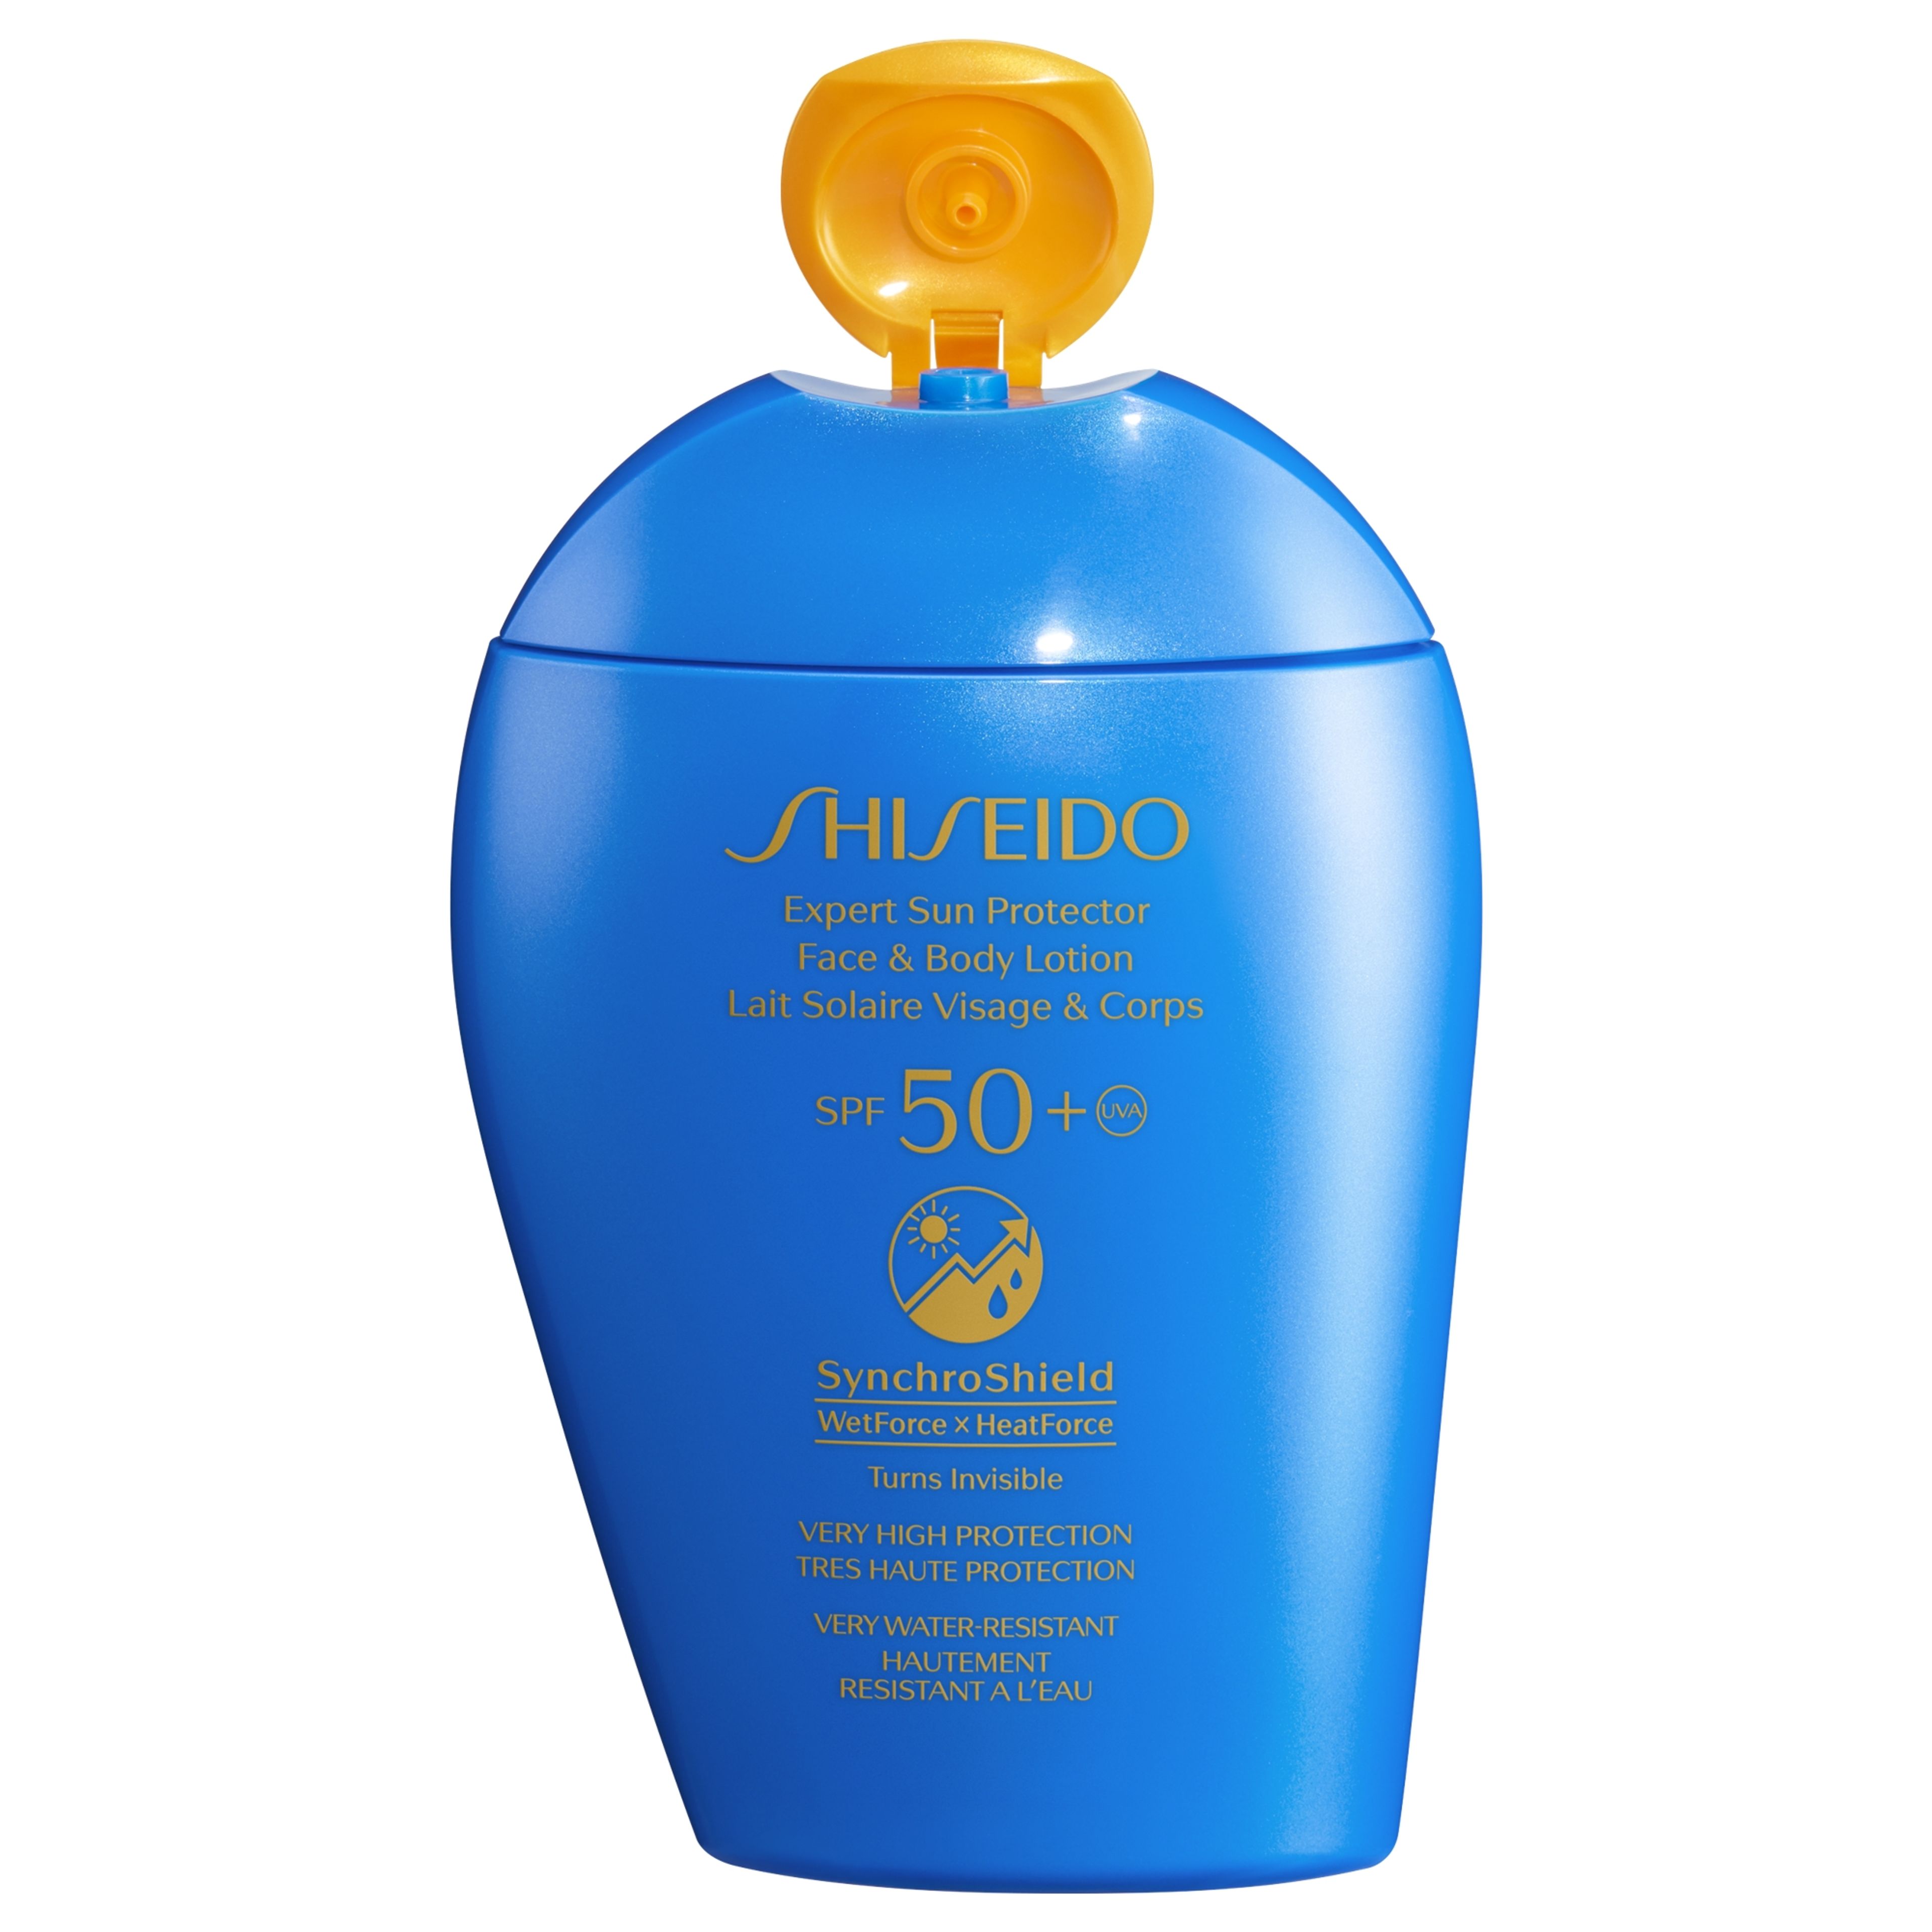 Shiseido Expert Sun Protector
face And Body Lotion 
spf50+ 2